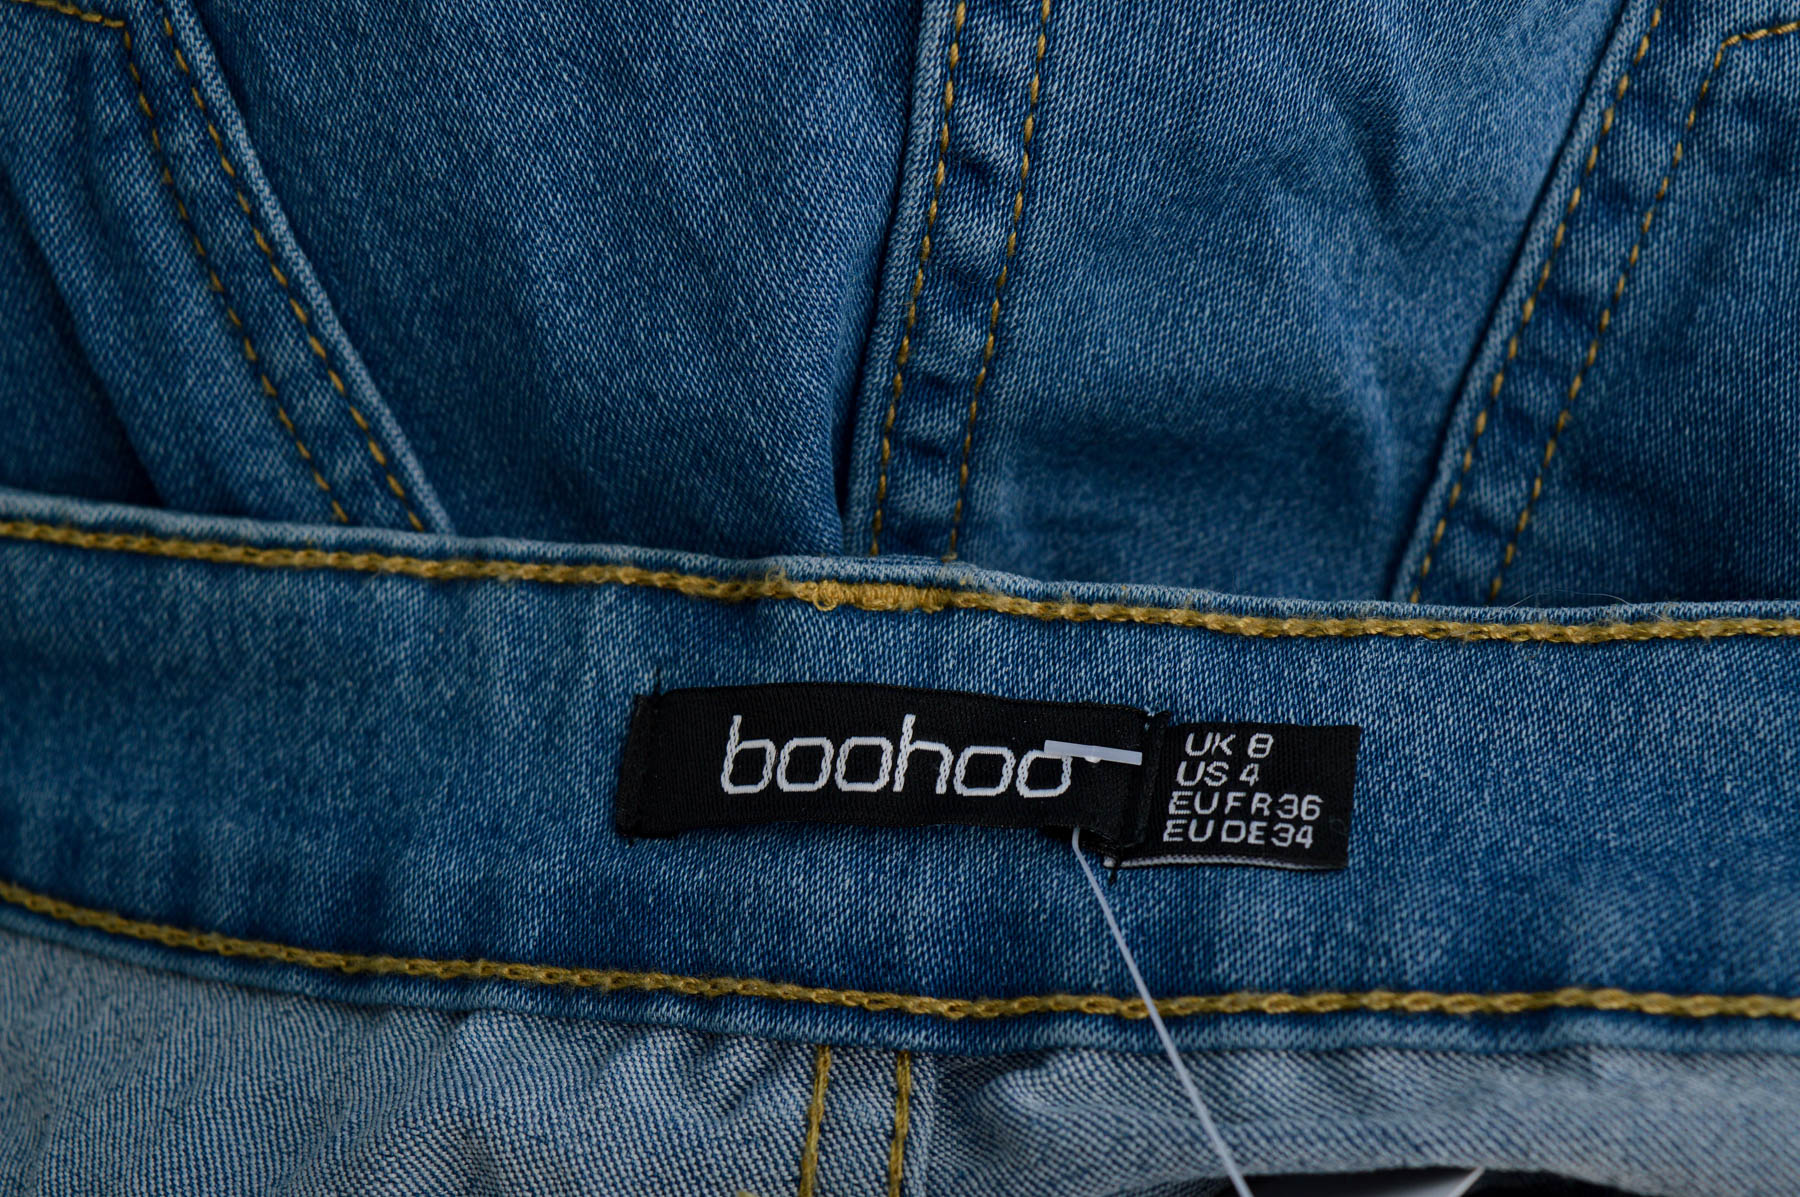 Women's jeans - Boohoo - 2